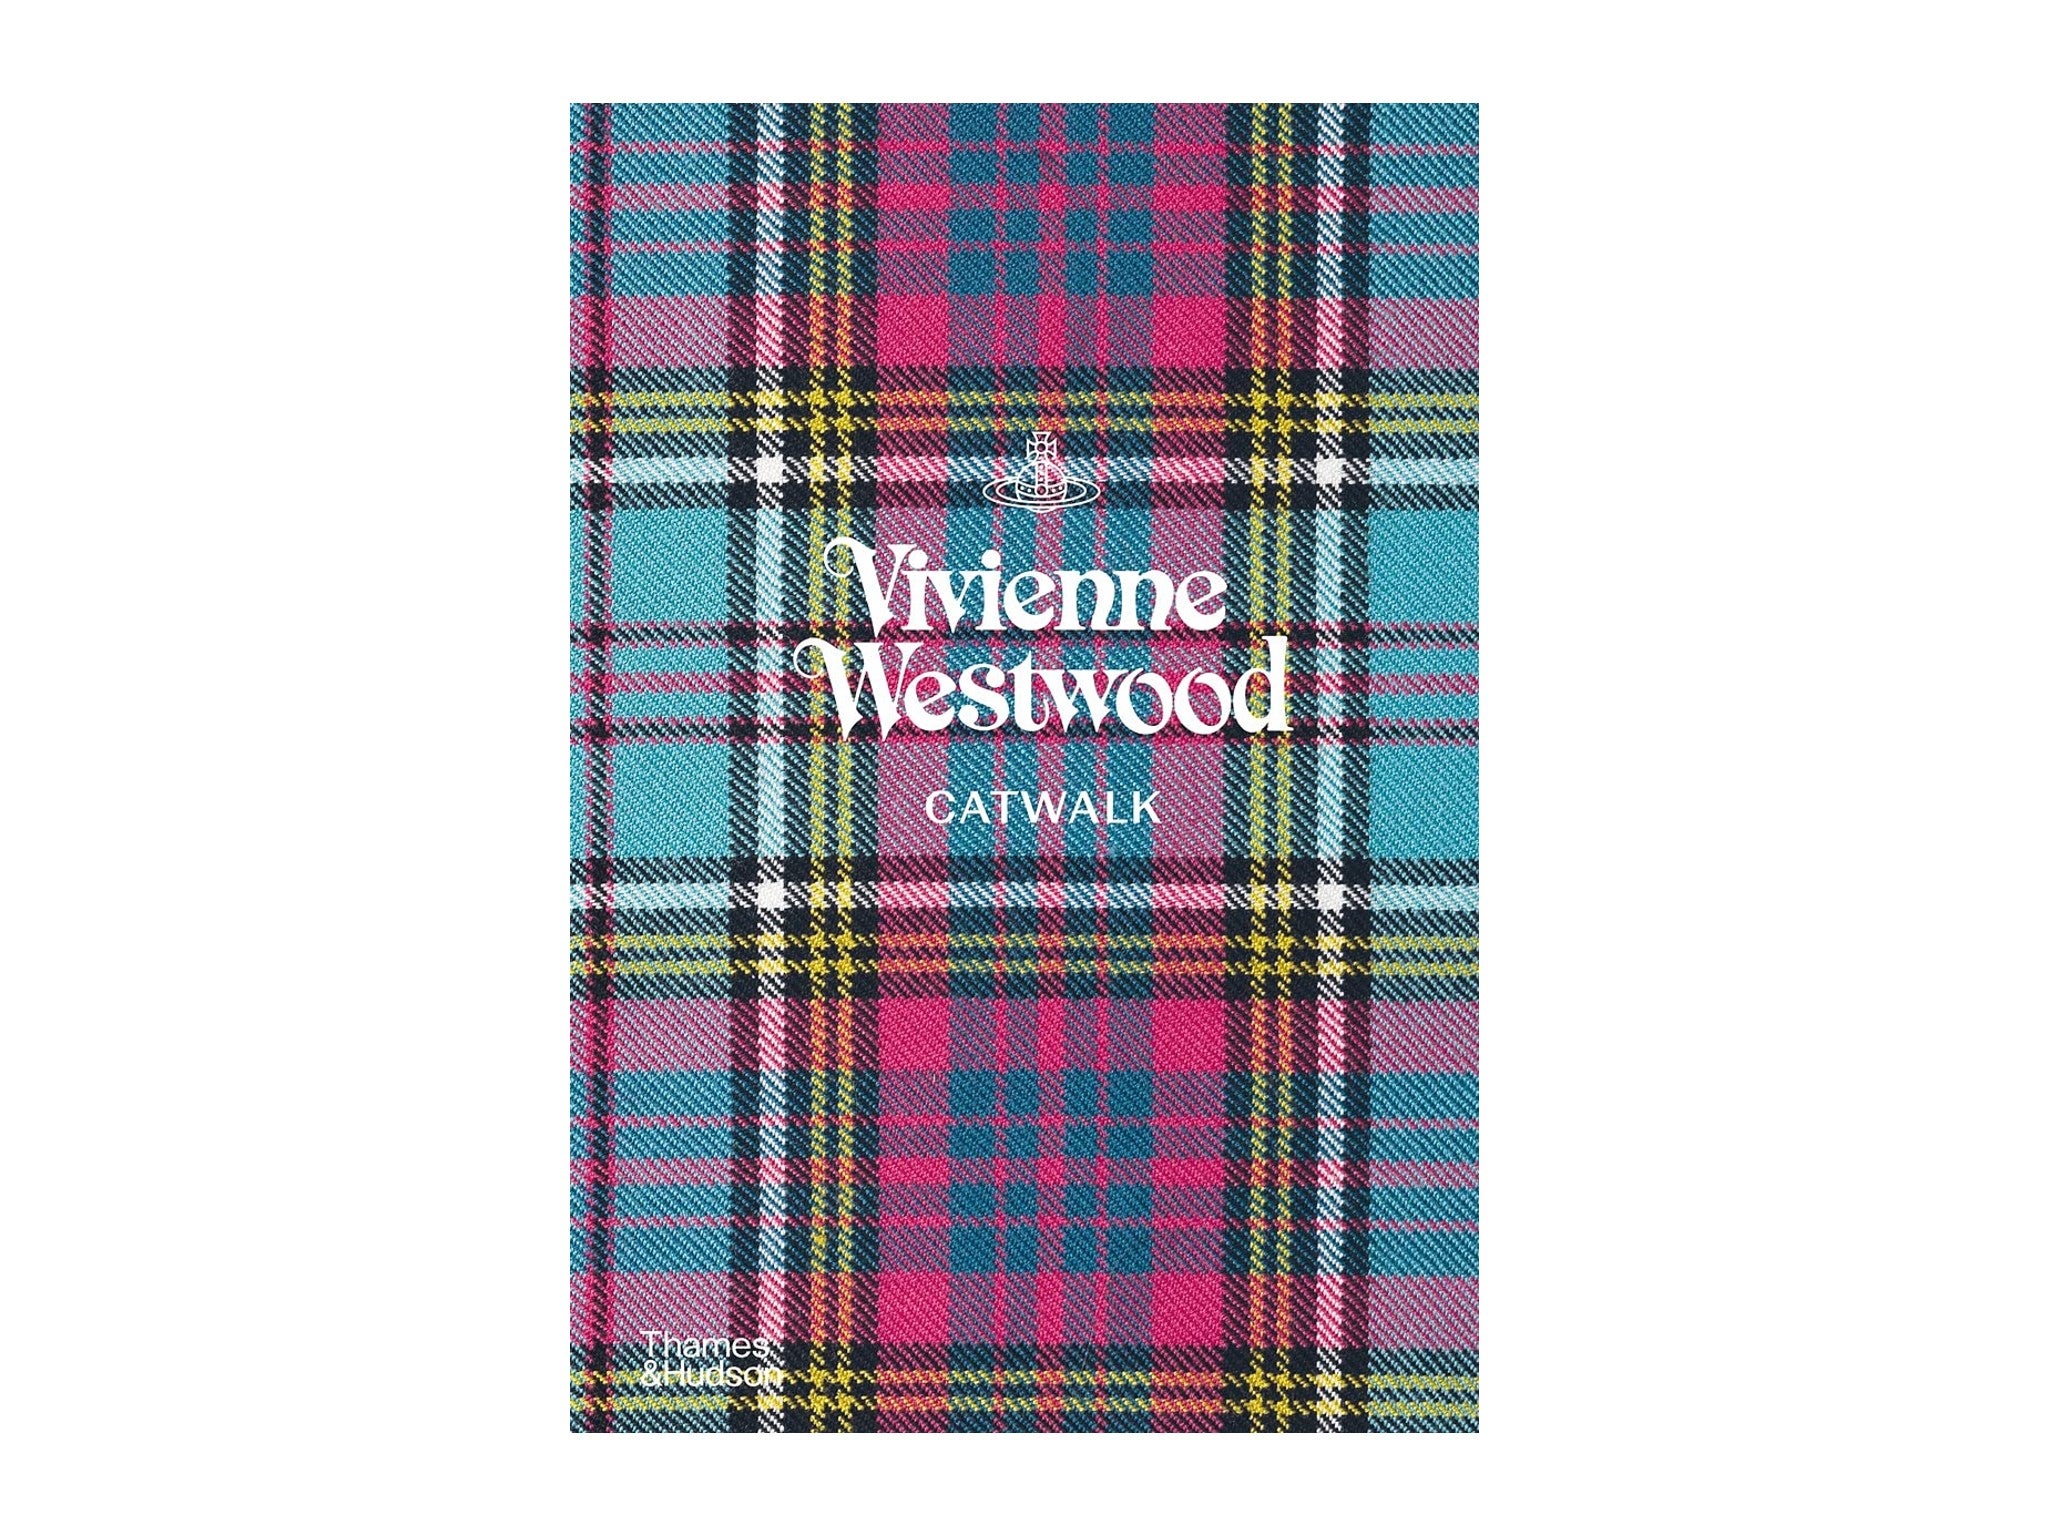 ‘Vivienne Westwood Catwalk’ by Alexander Fury indybest.jpg